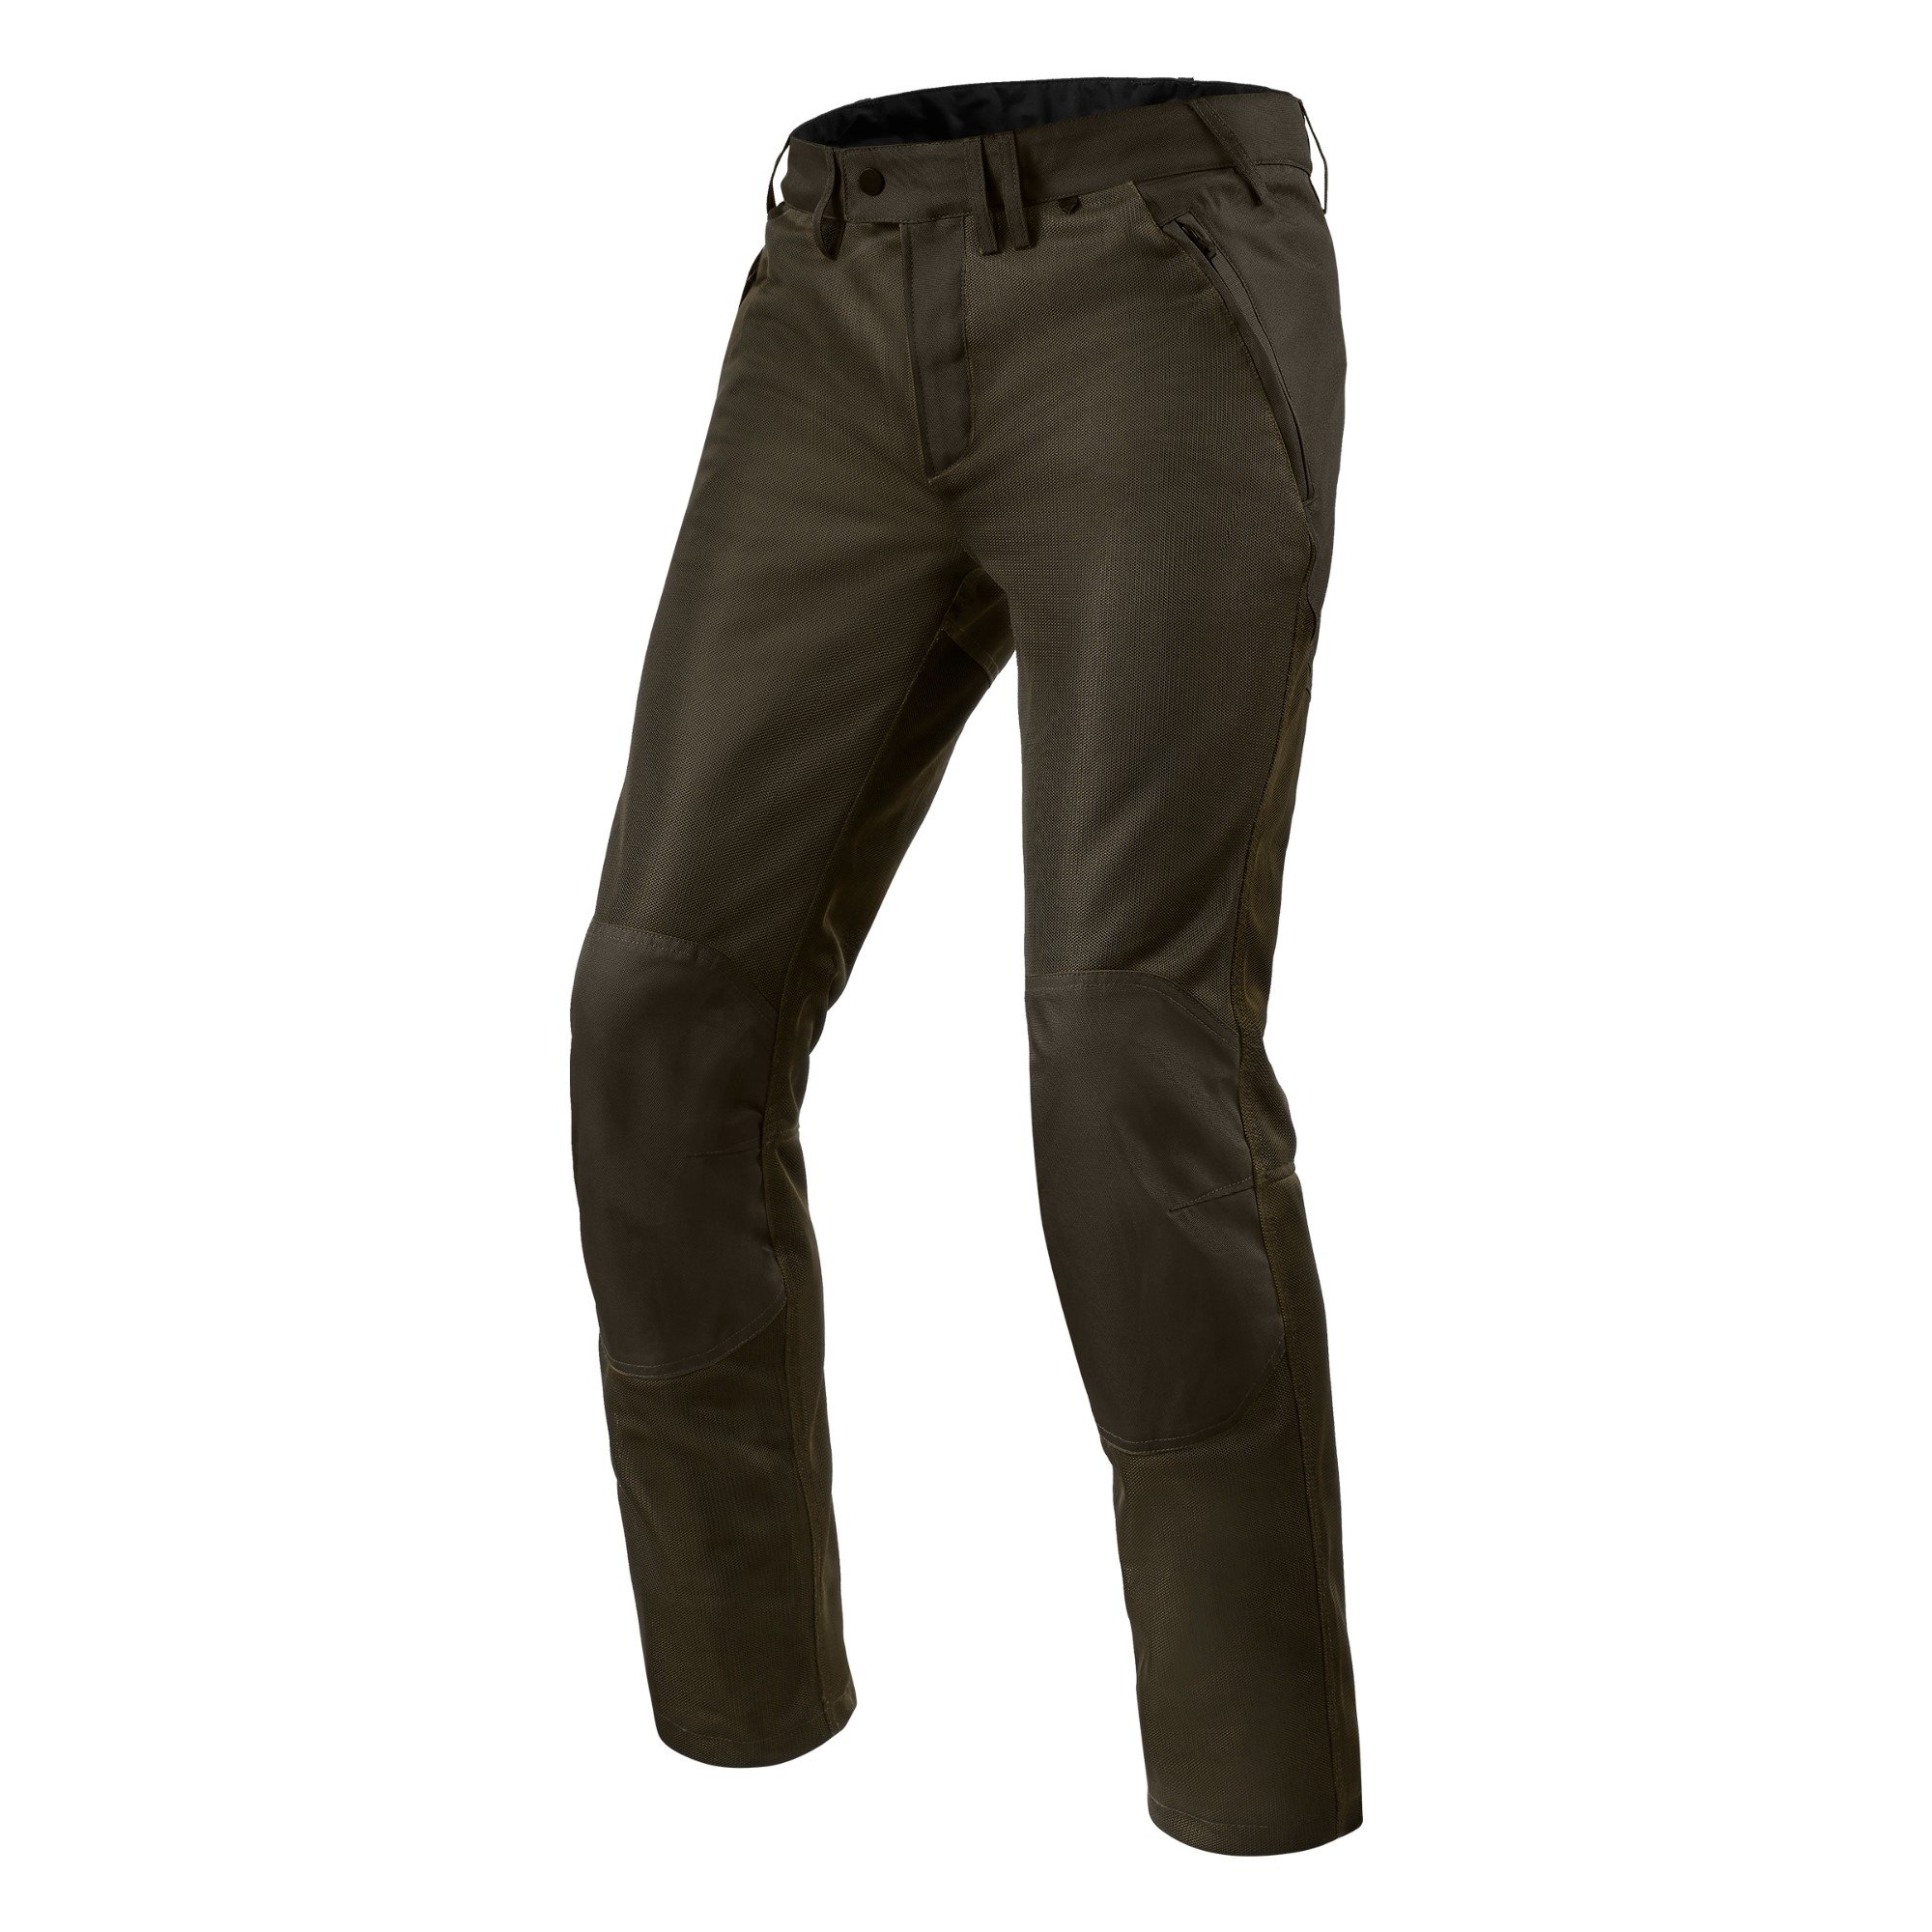 Image of REV'IT! Pants Eclipse 2 Black Olive Long Motorcycle Pants Size L ID 8700001368872